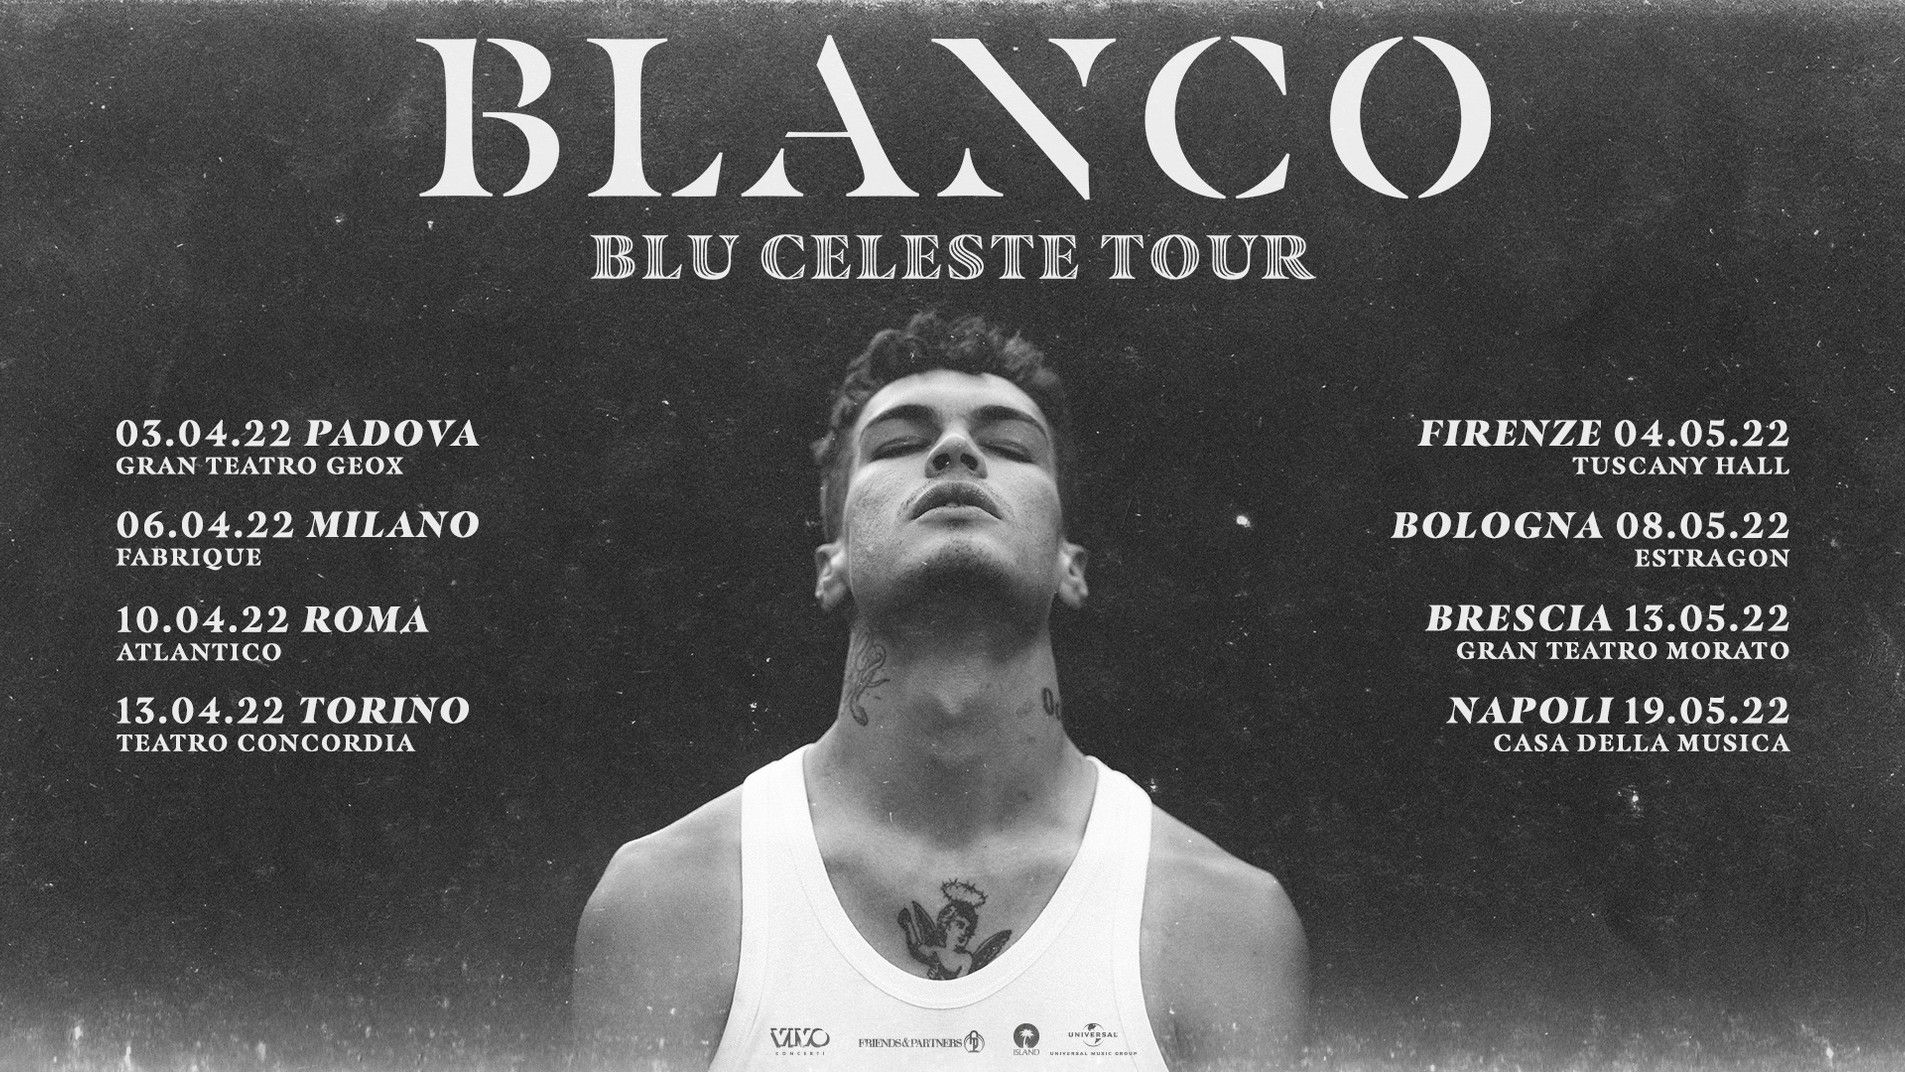 Blanco "Blu Celeste Tour"